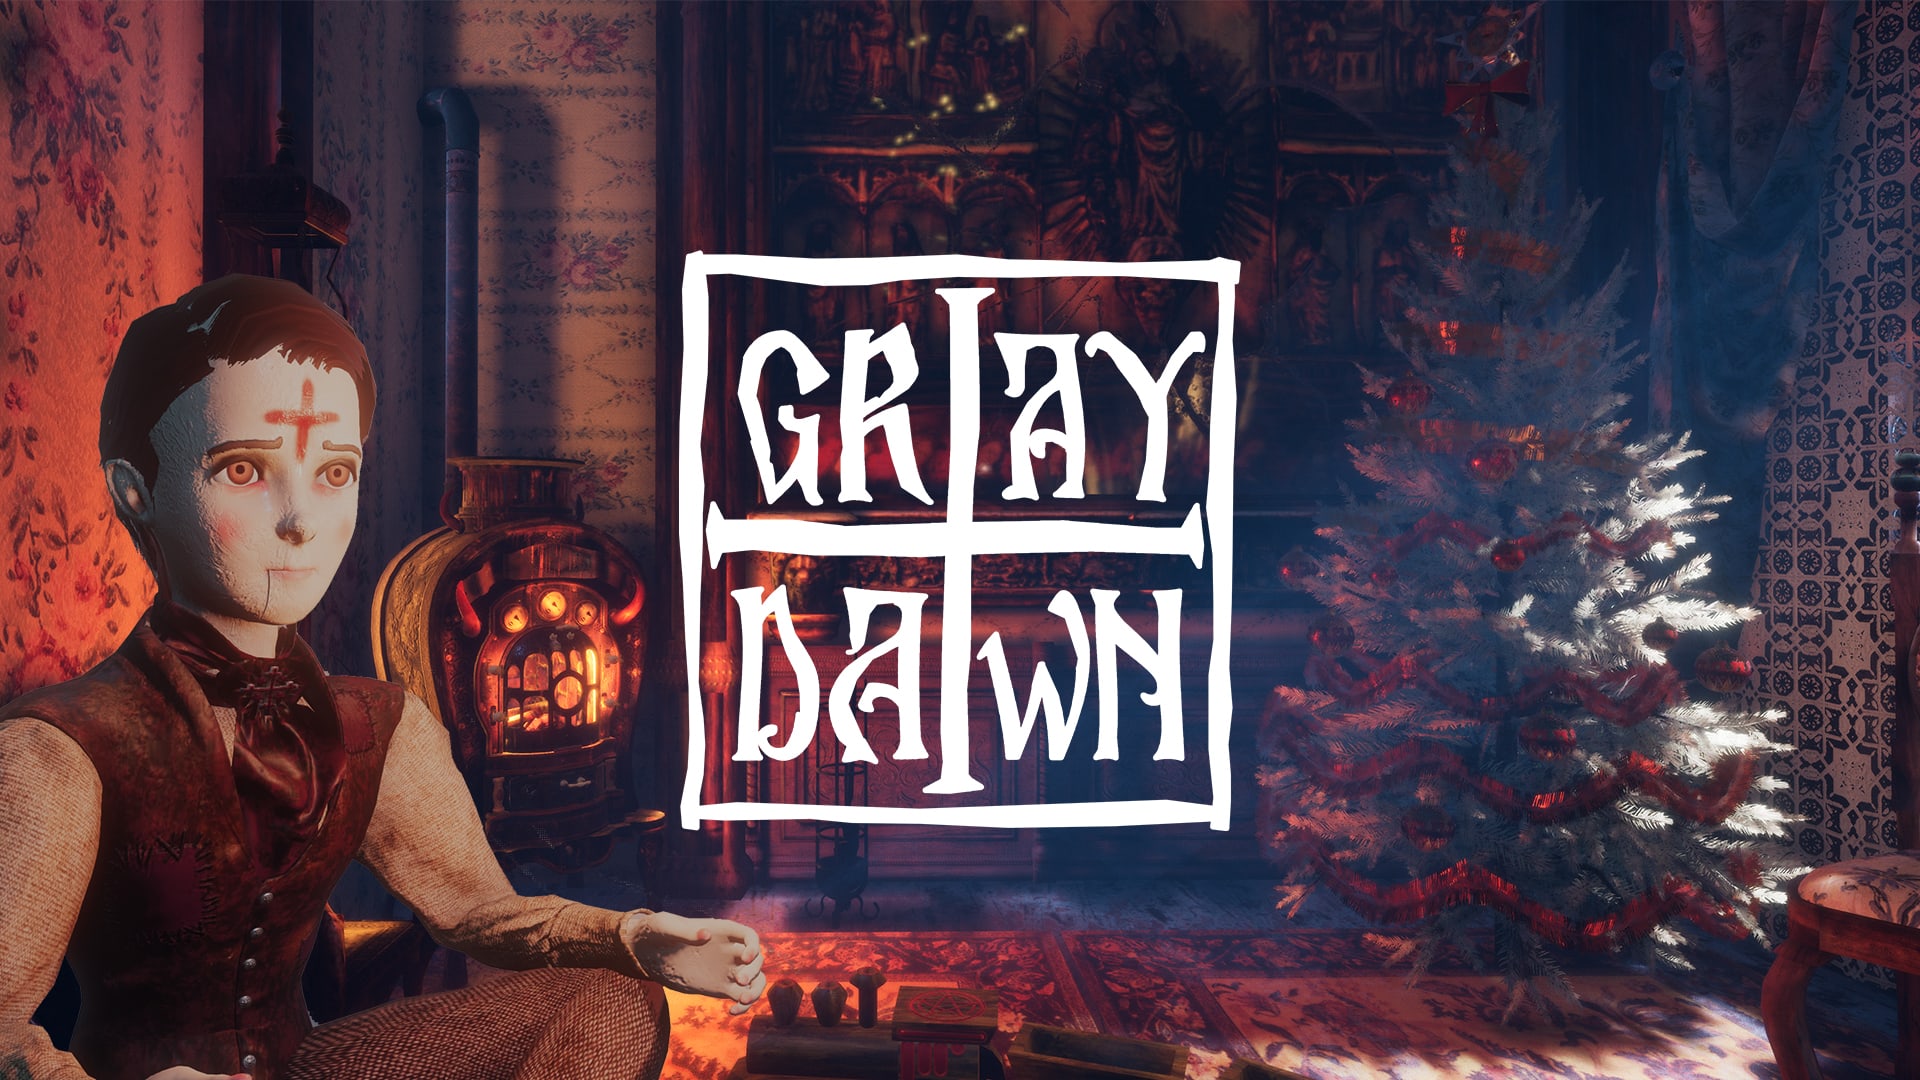 Gray Dawn 1